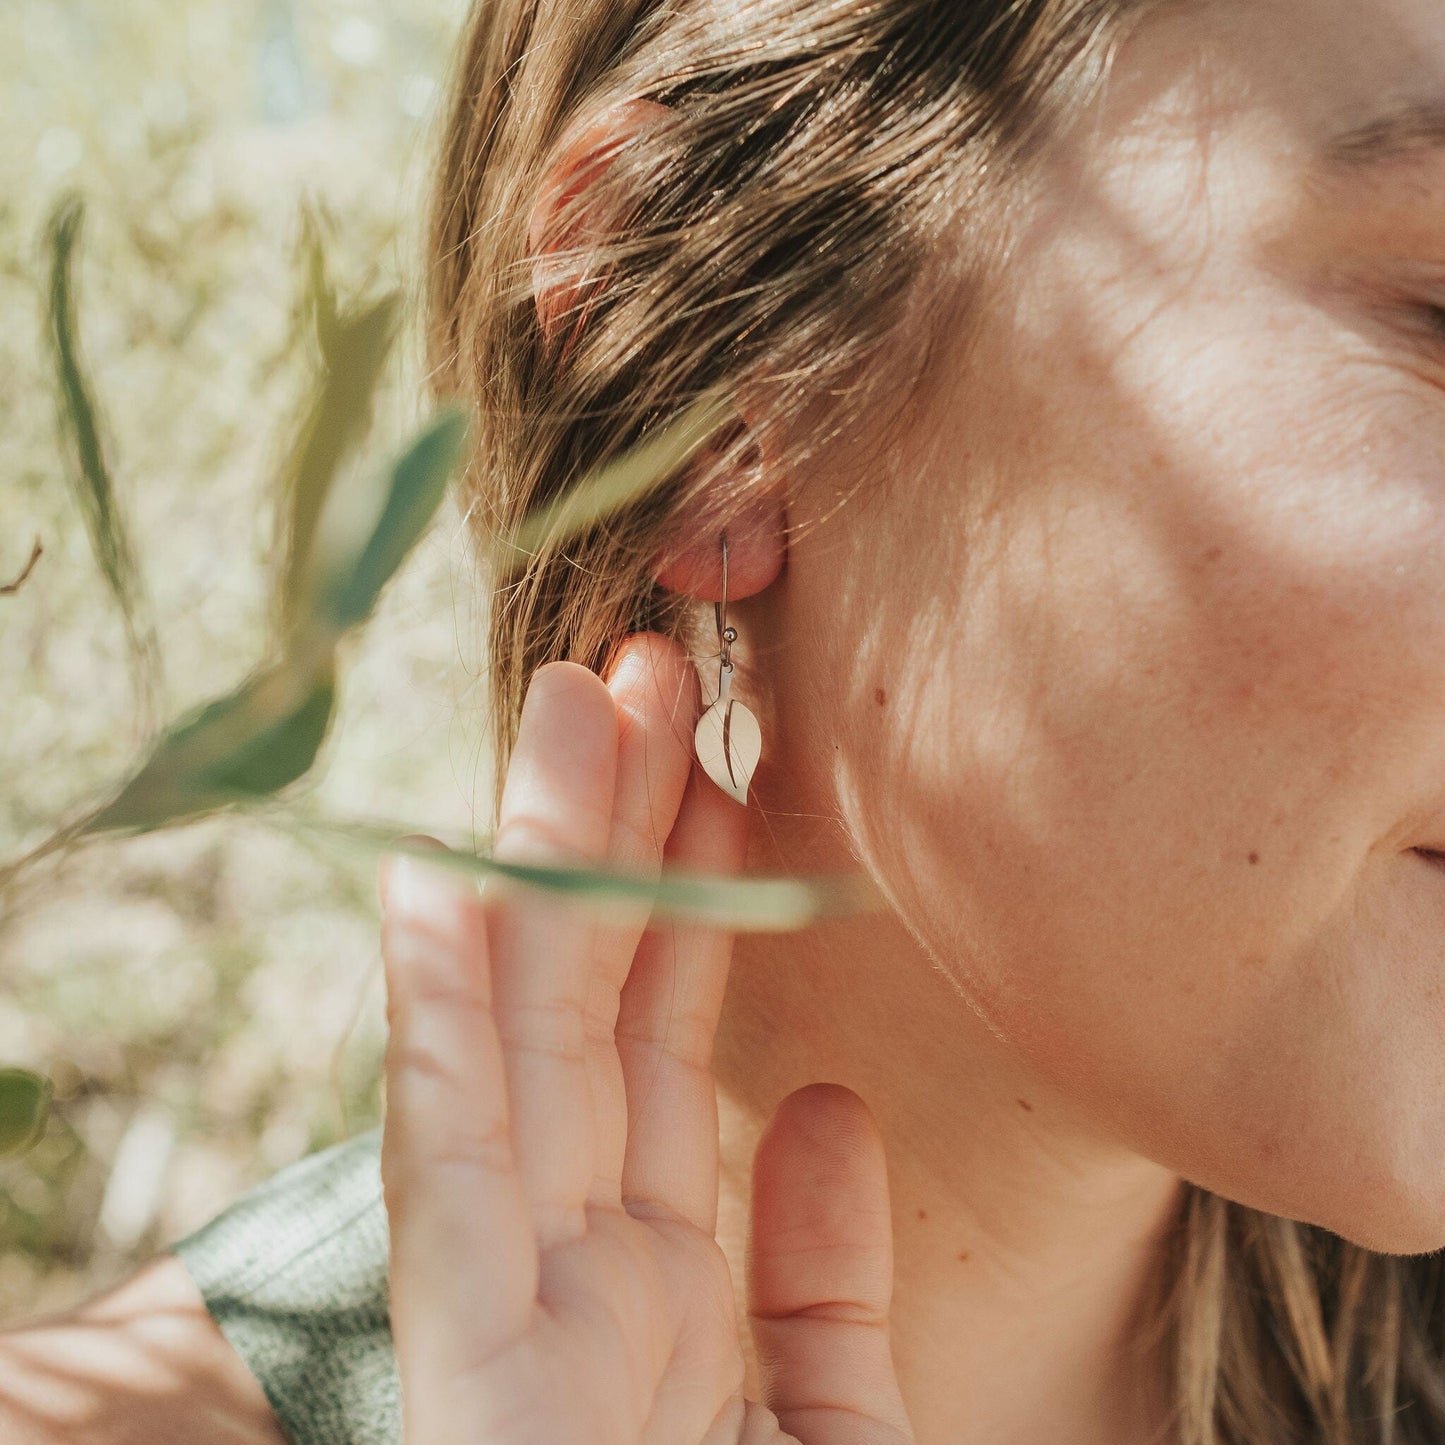 Girl wearing leaf earrings in stainless steel 